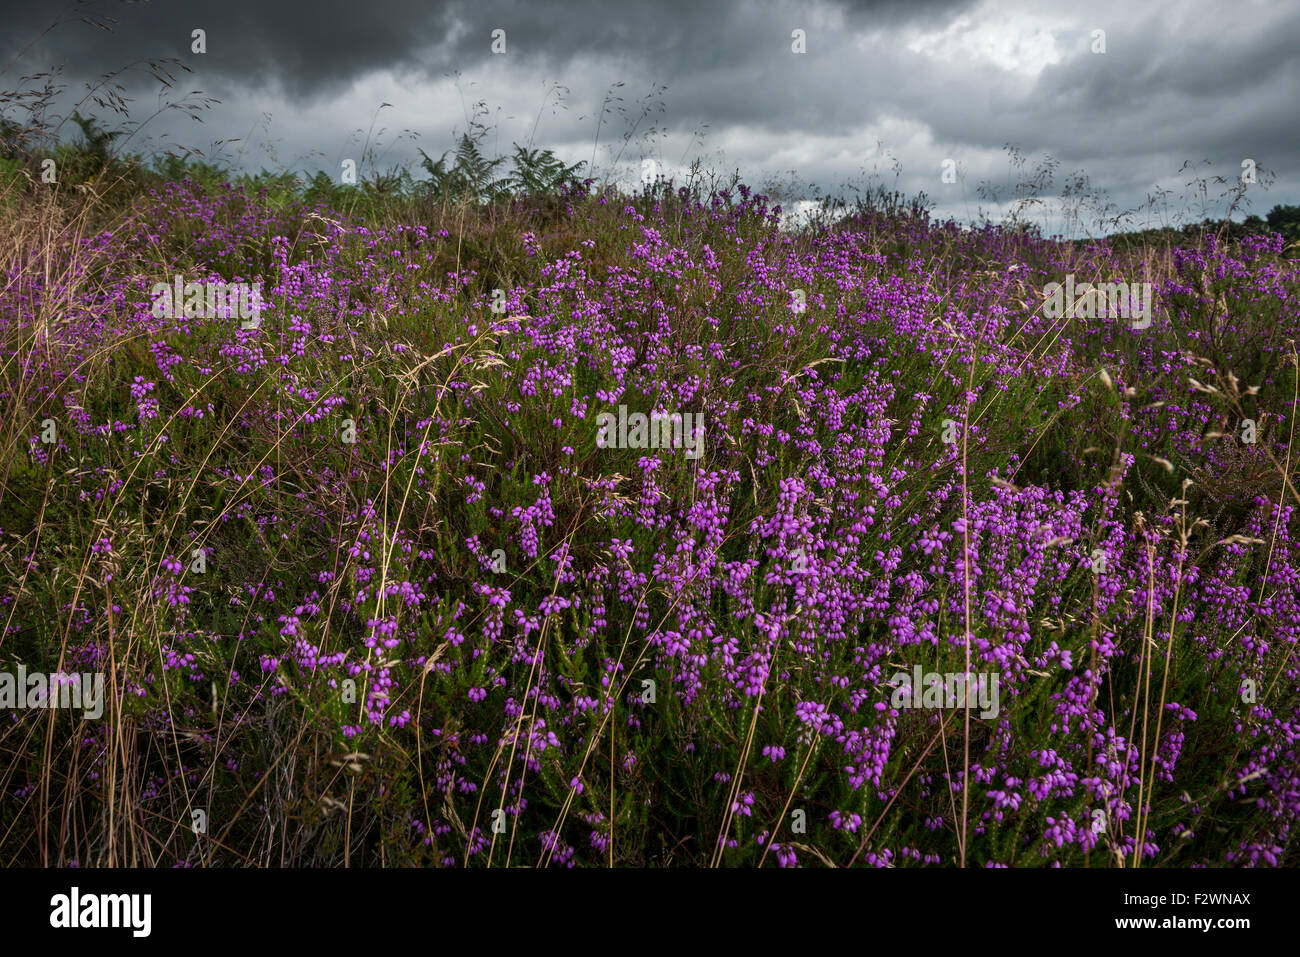 Wild heather in bloom on Southern English heathland. Stock Photo